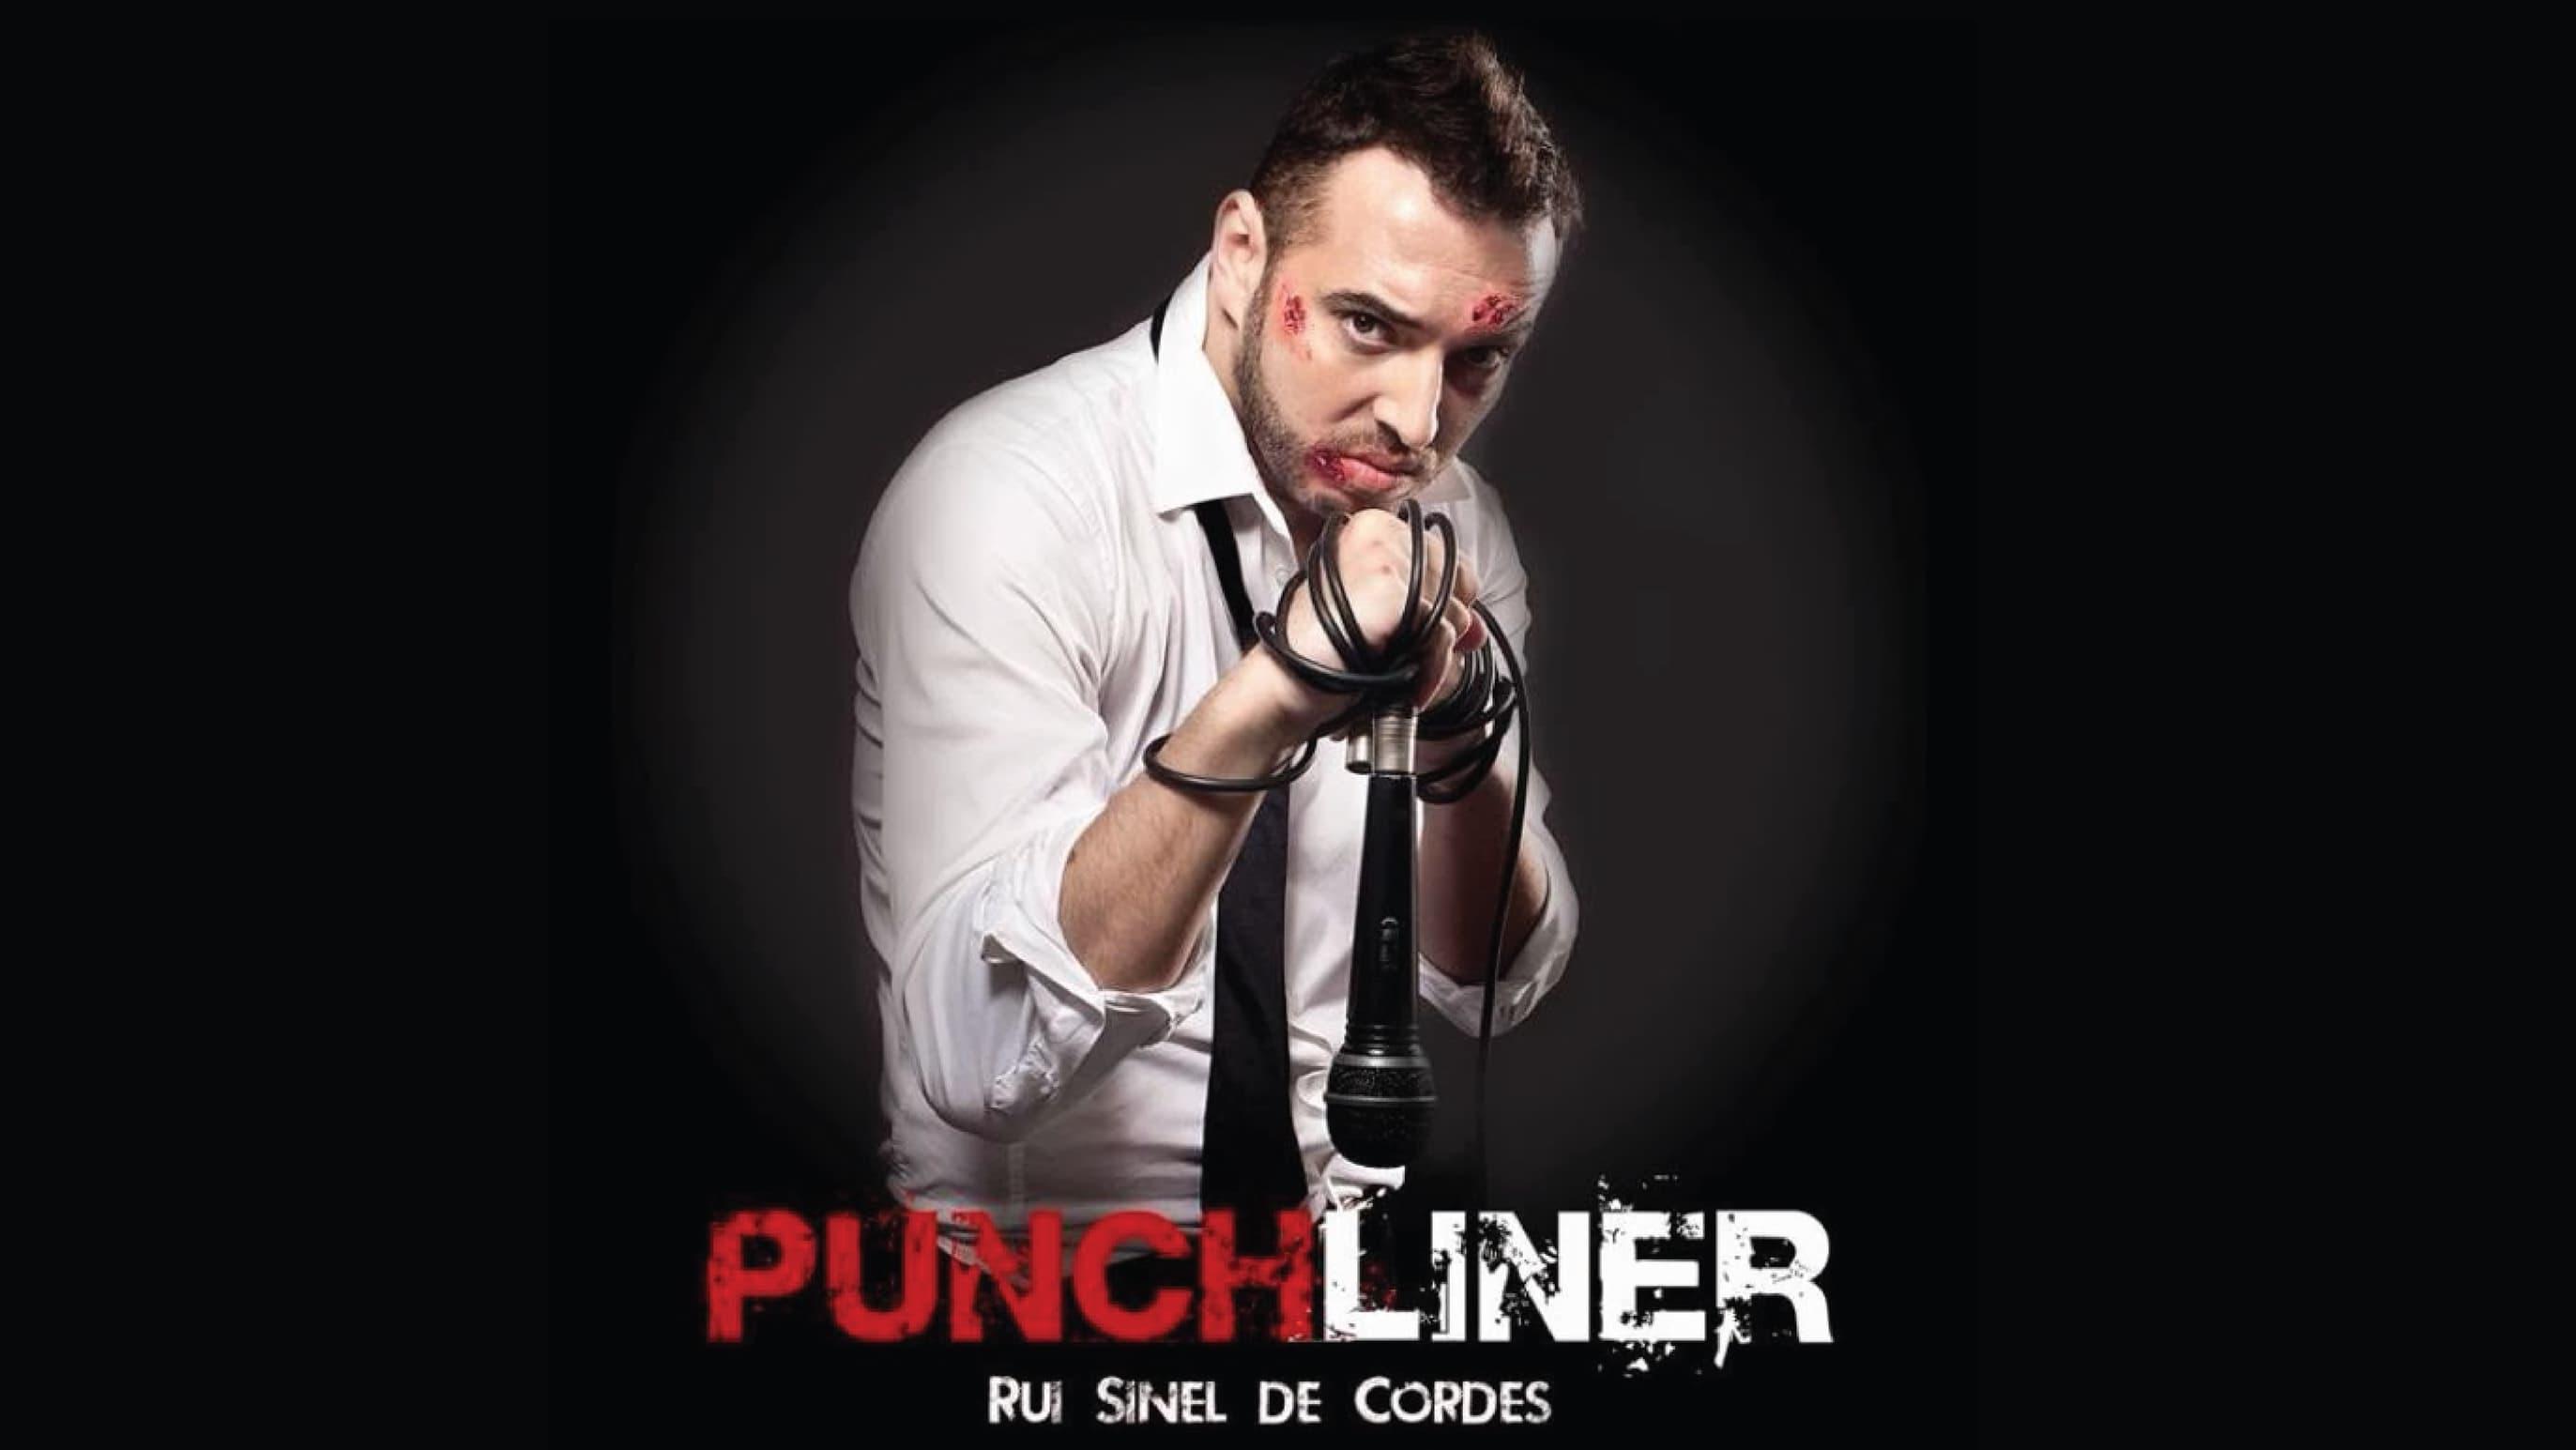 Rui Sinel de Cordes: Punchliner backdrop